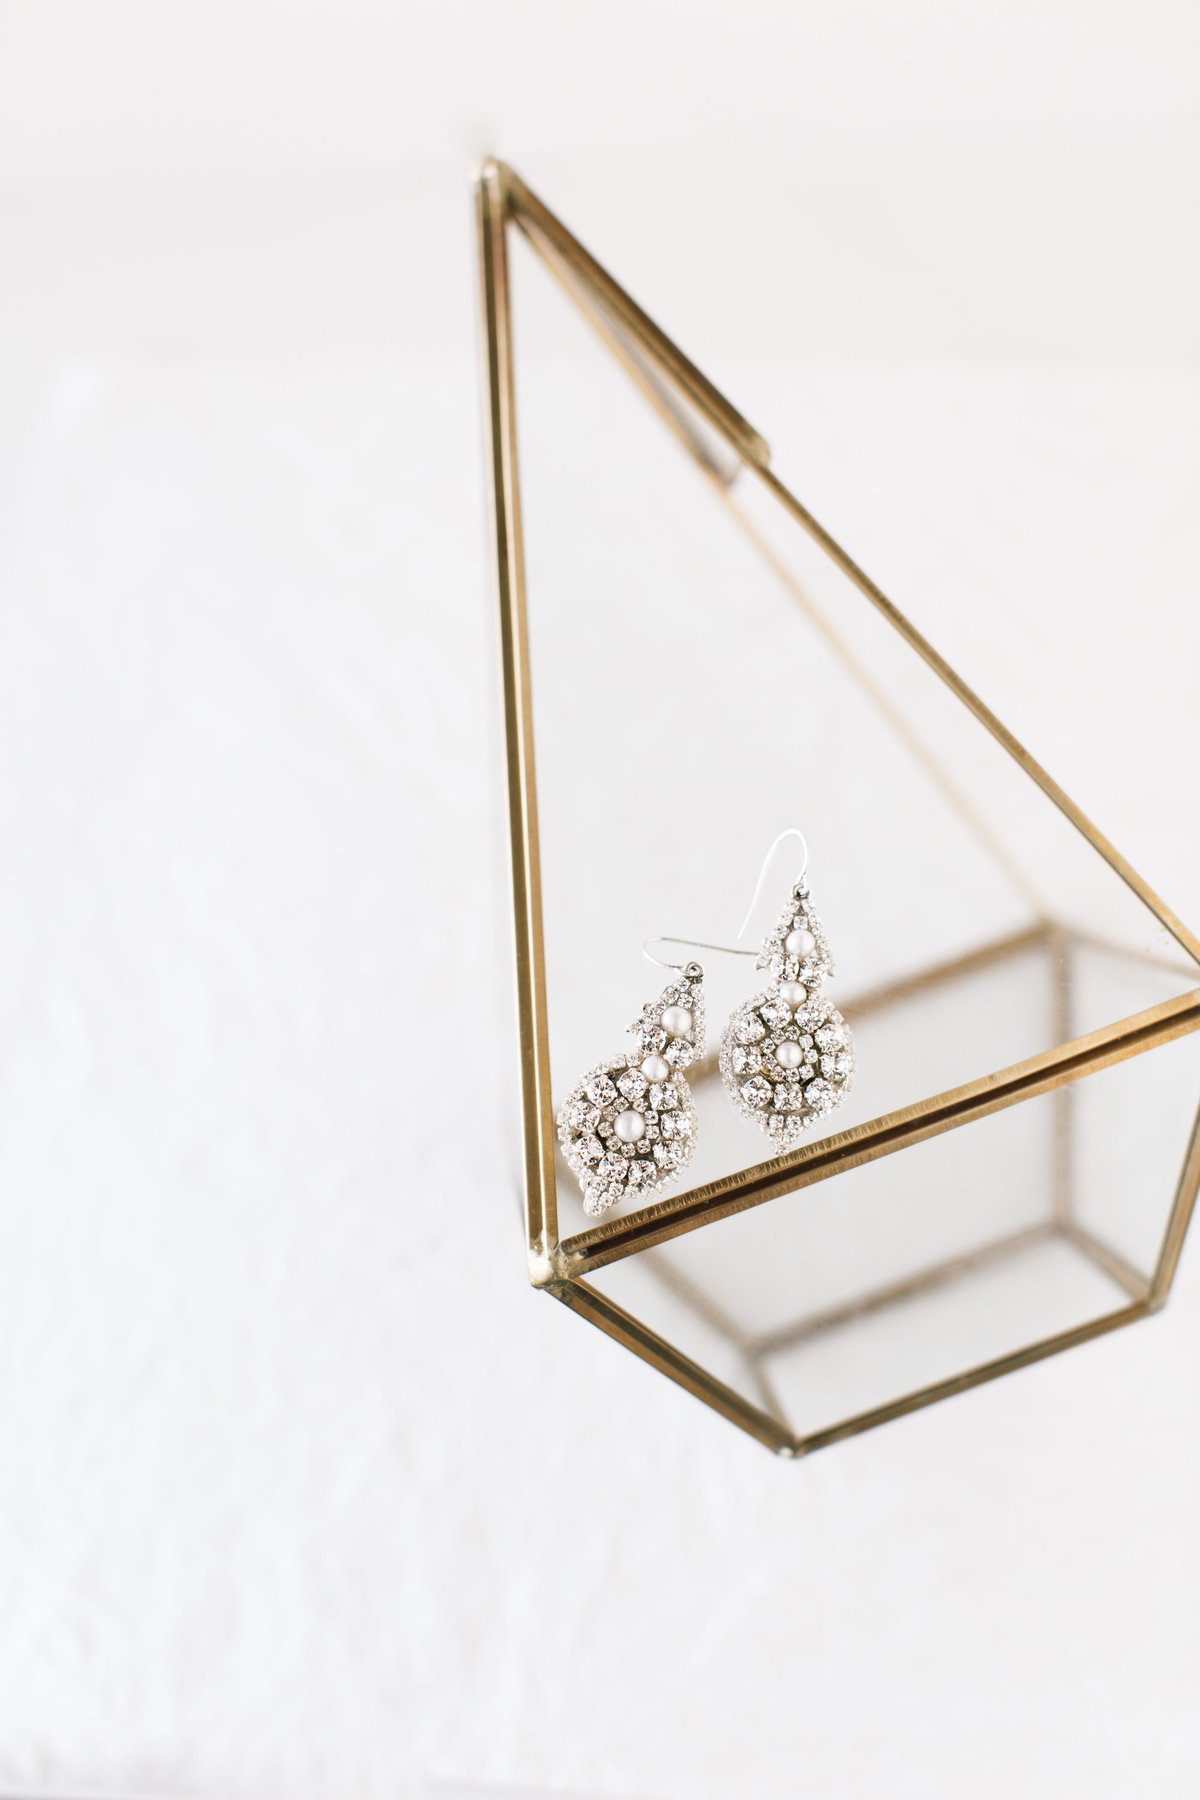 heirloom bridal jewelry photography on brass geometric